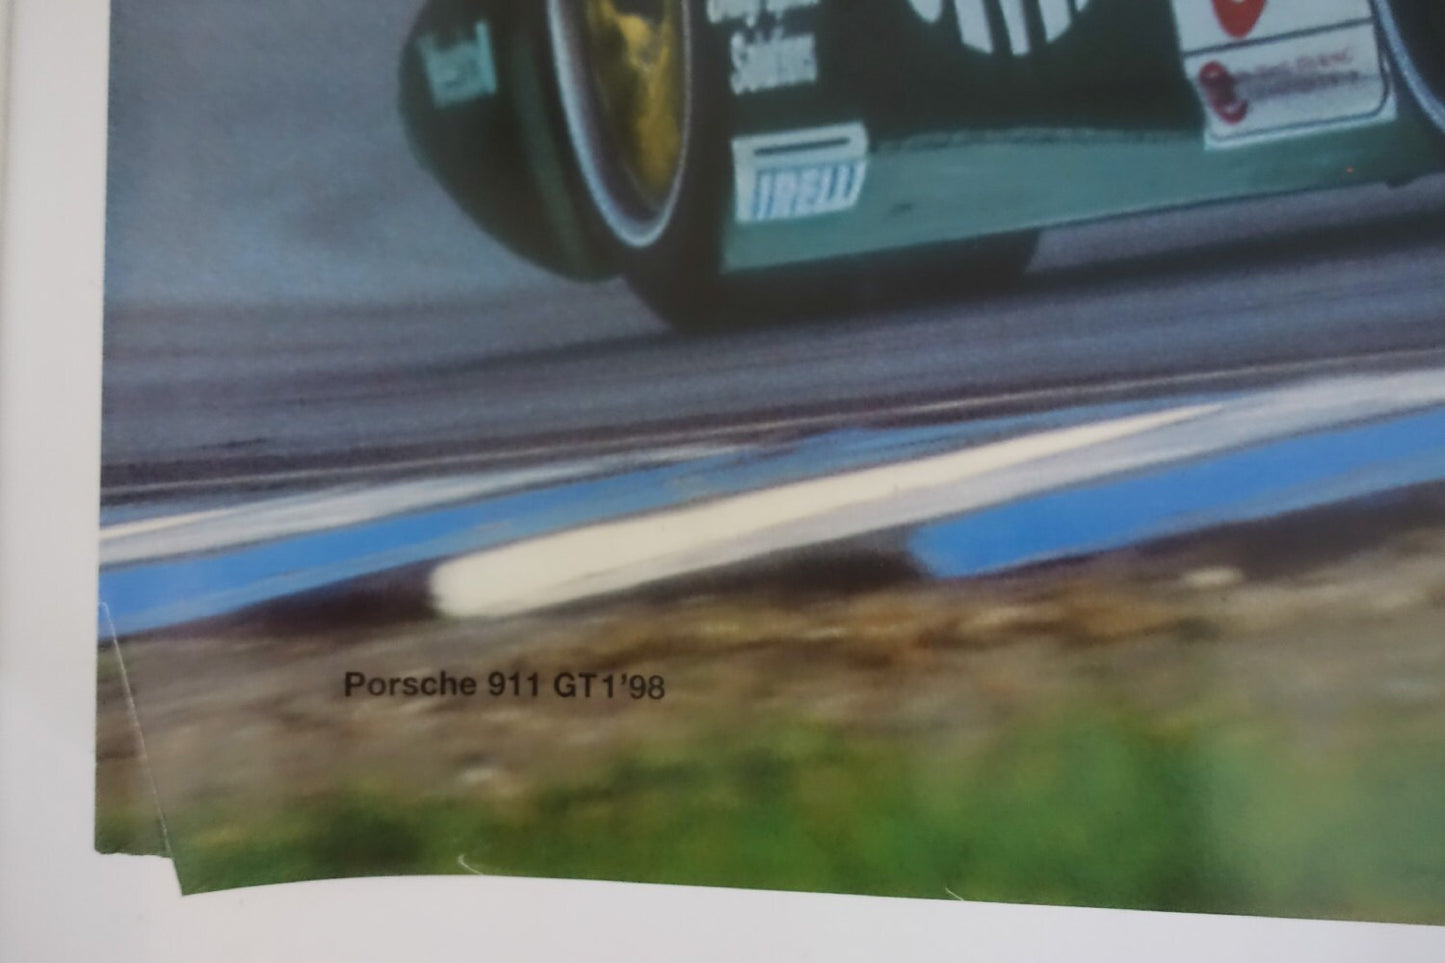 1998 Pirelli Tires Advertisement - Original Vintage Poster